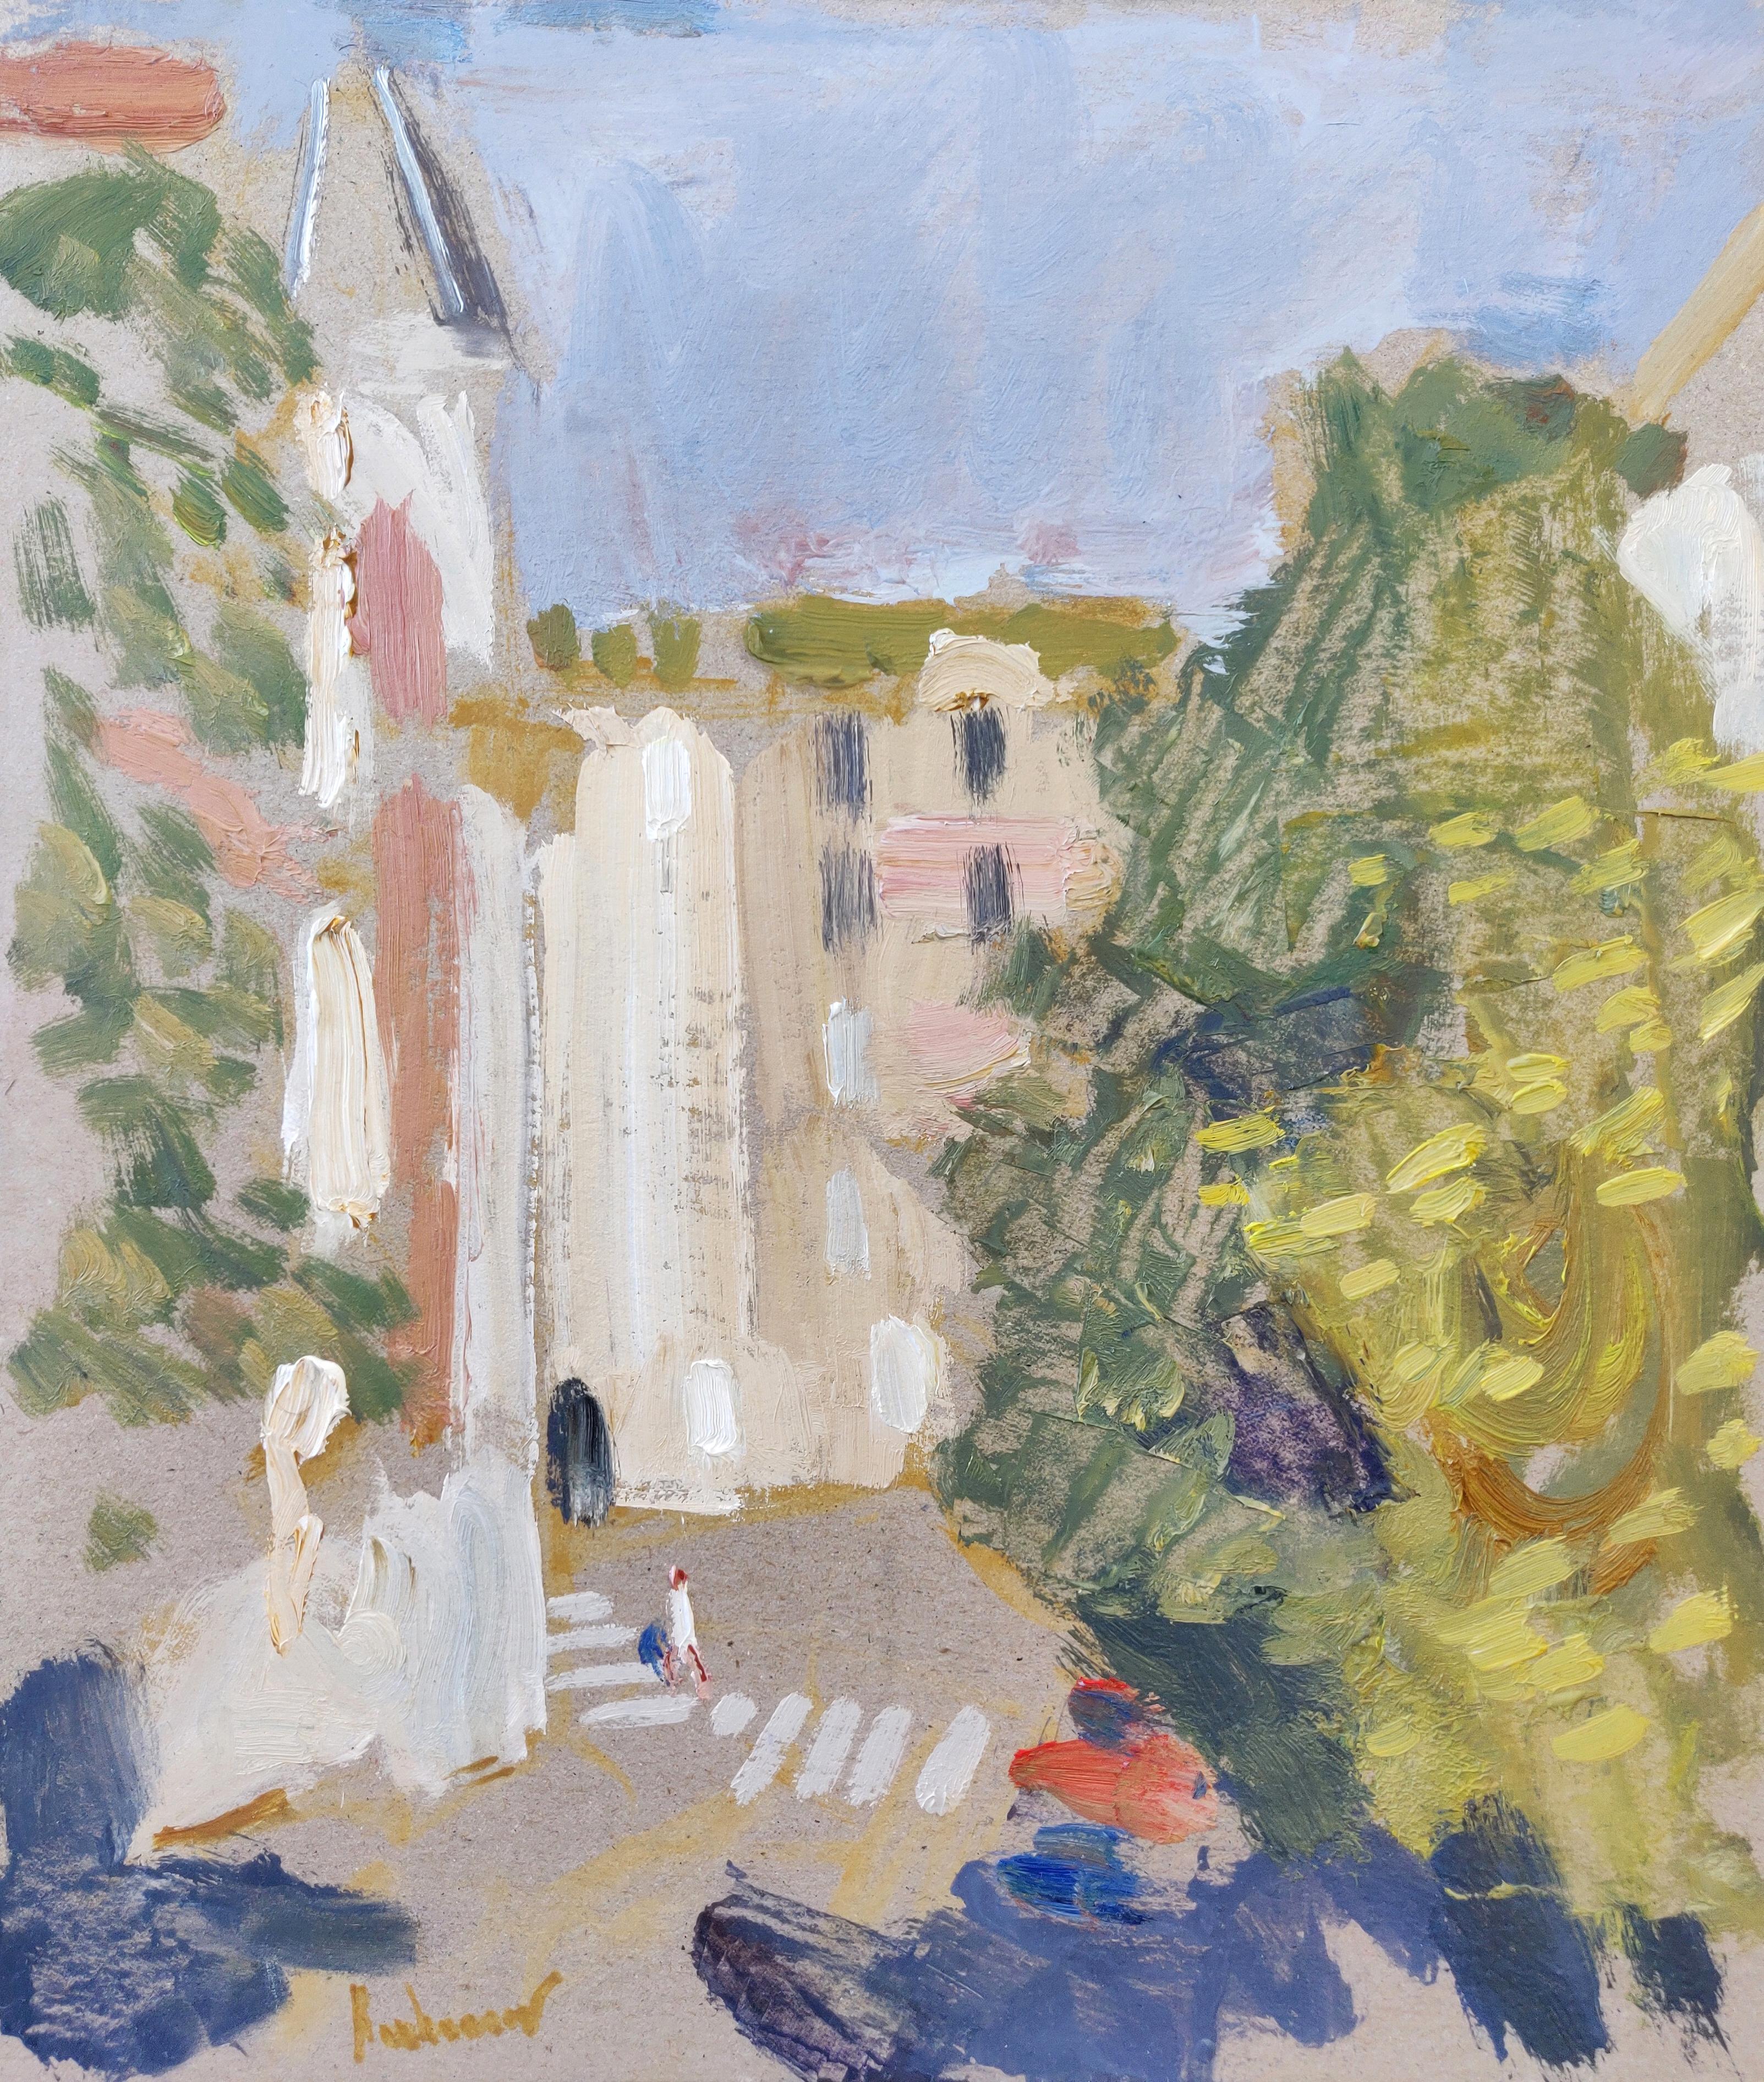 Samir Rakhmanov Landscape Painting - Street In Montmartre - 21st Century Contemporary Paris Urban Oil Painting